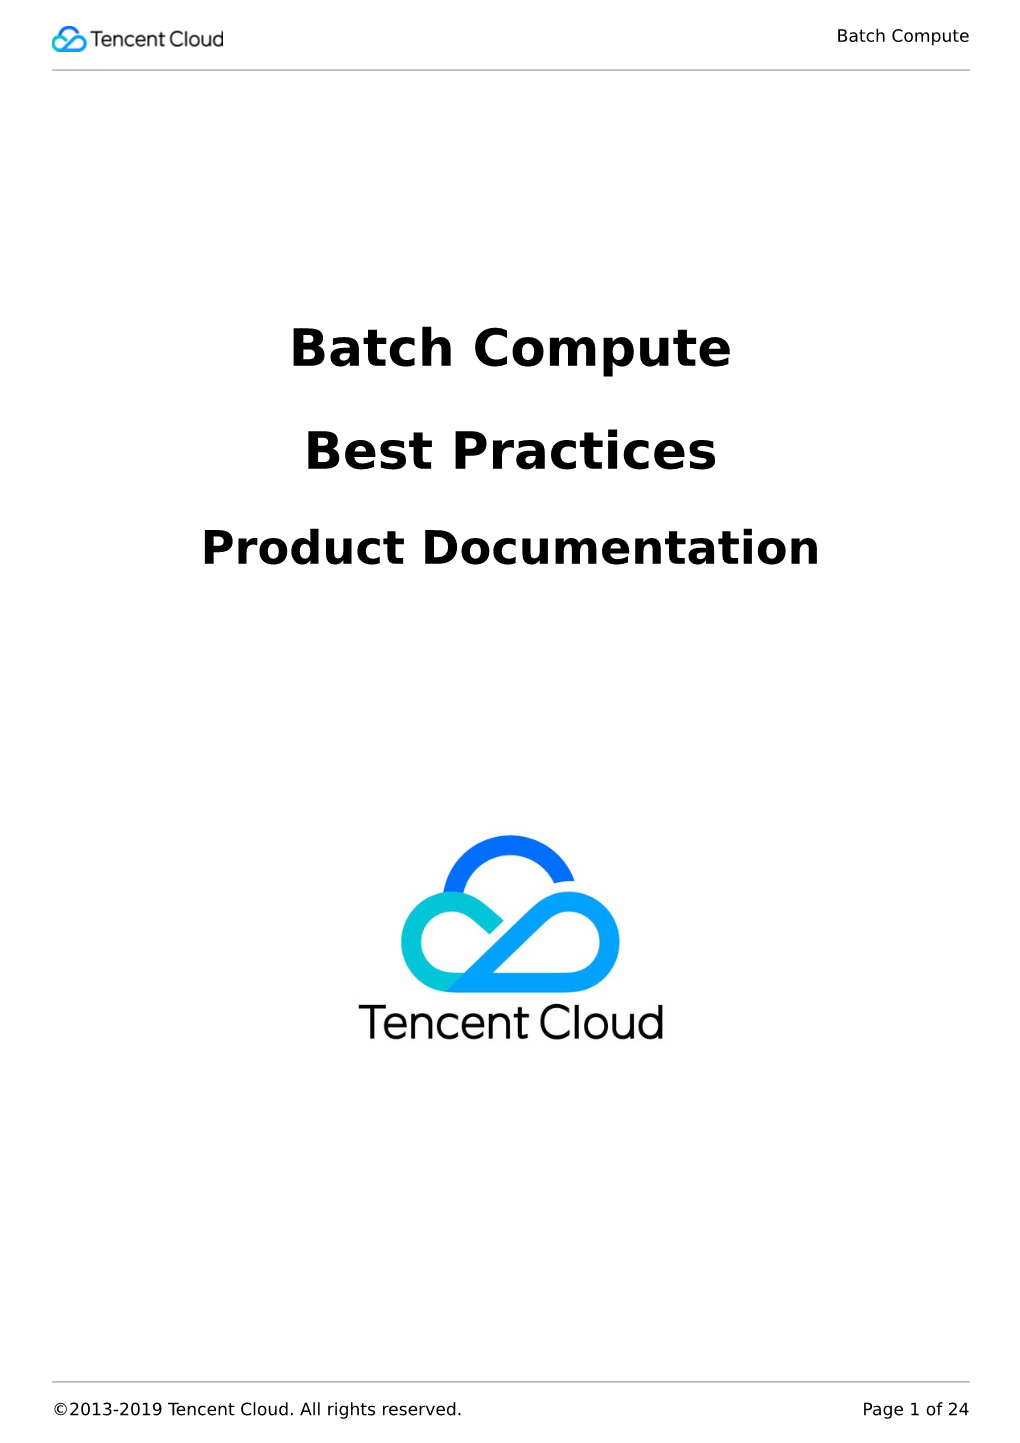 Batch Compute Best Practices